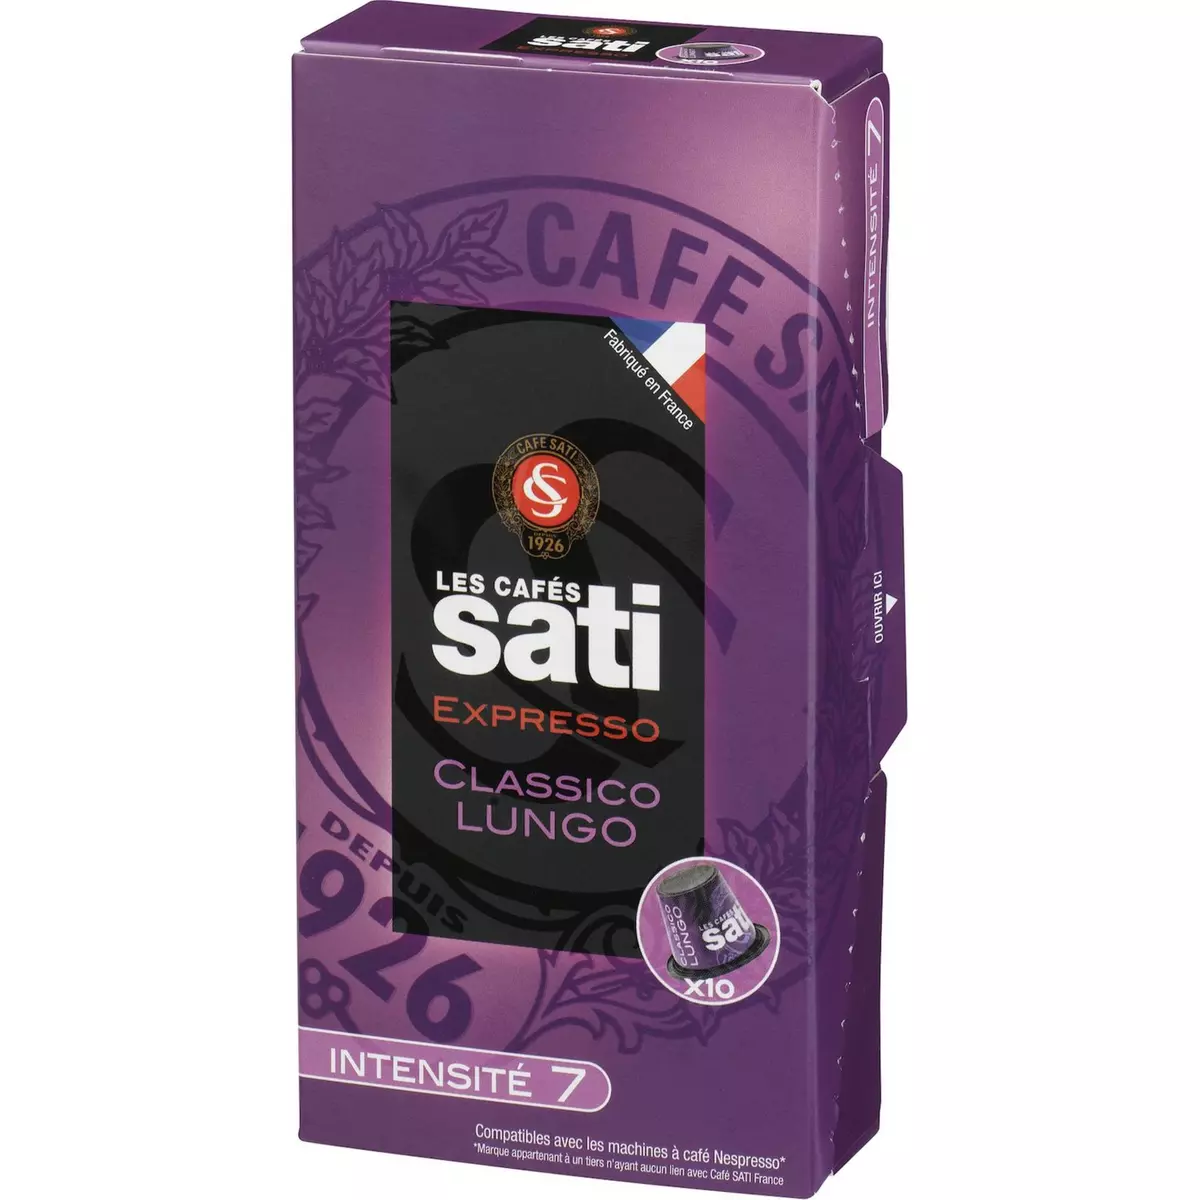 LES CAFES SATI Capsules de café expresso classico lungo intensité 7 compatibles Nespresso 10 capsules 55g